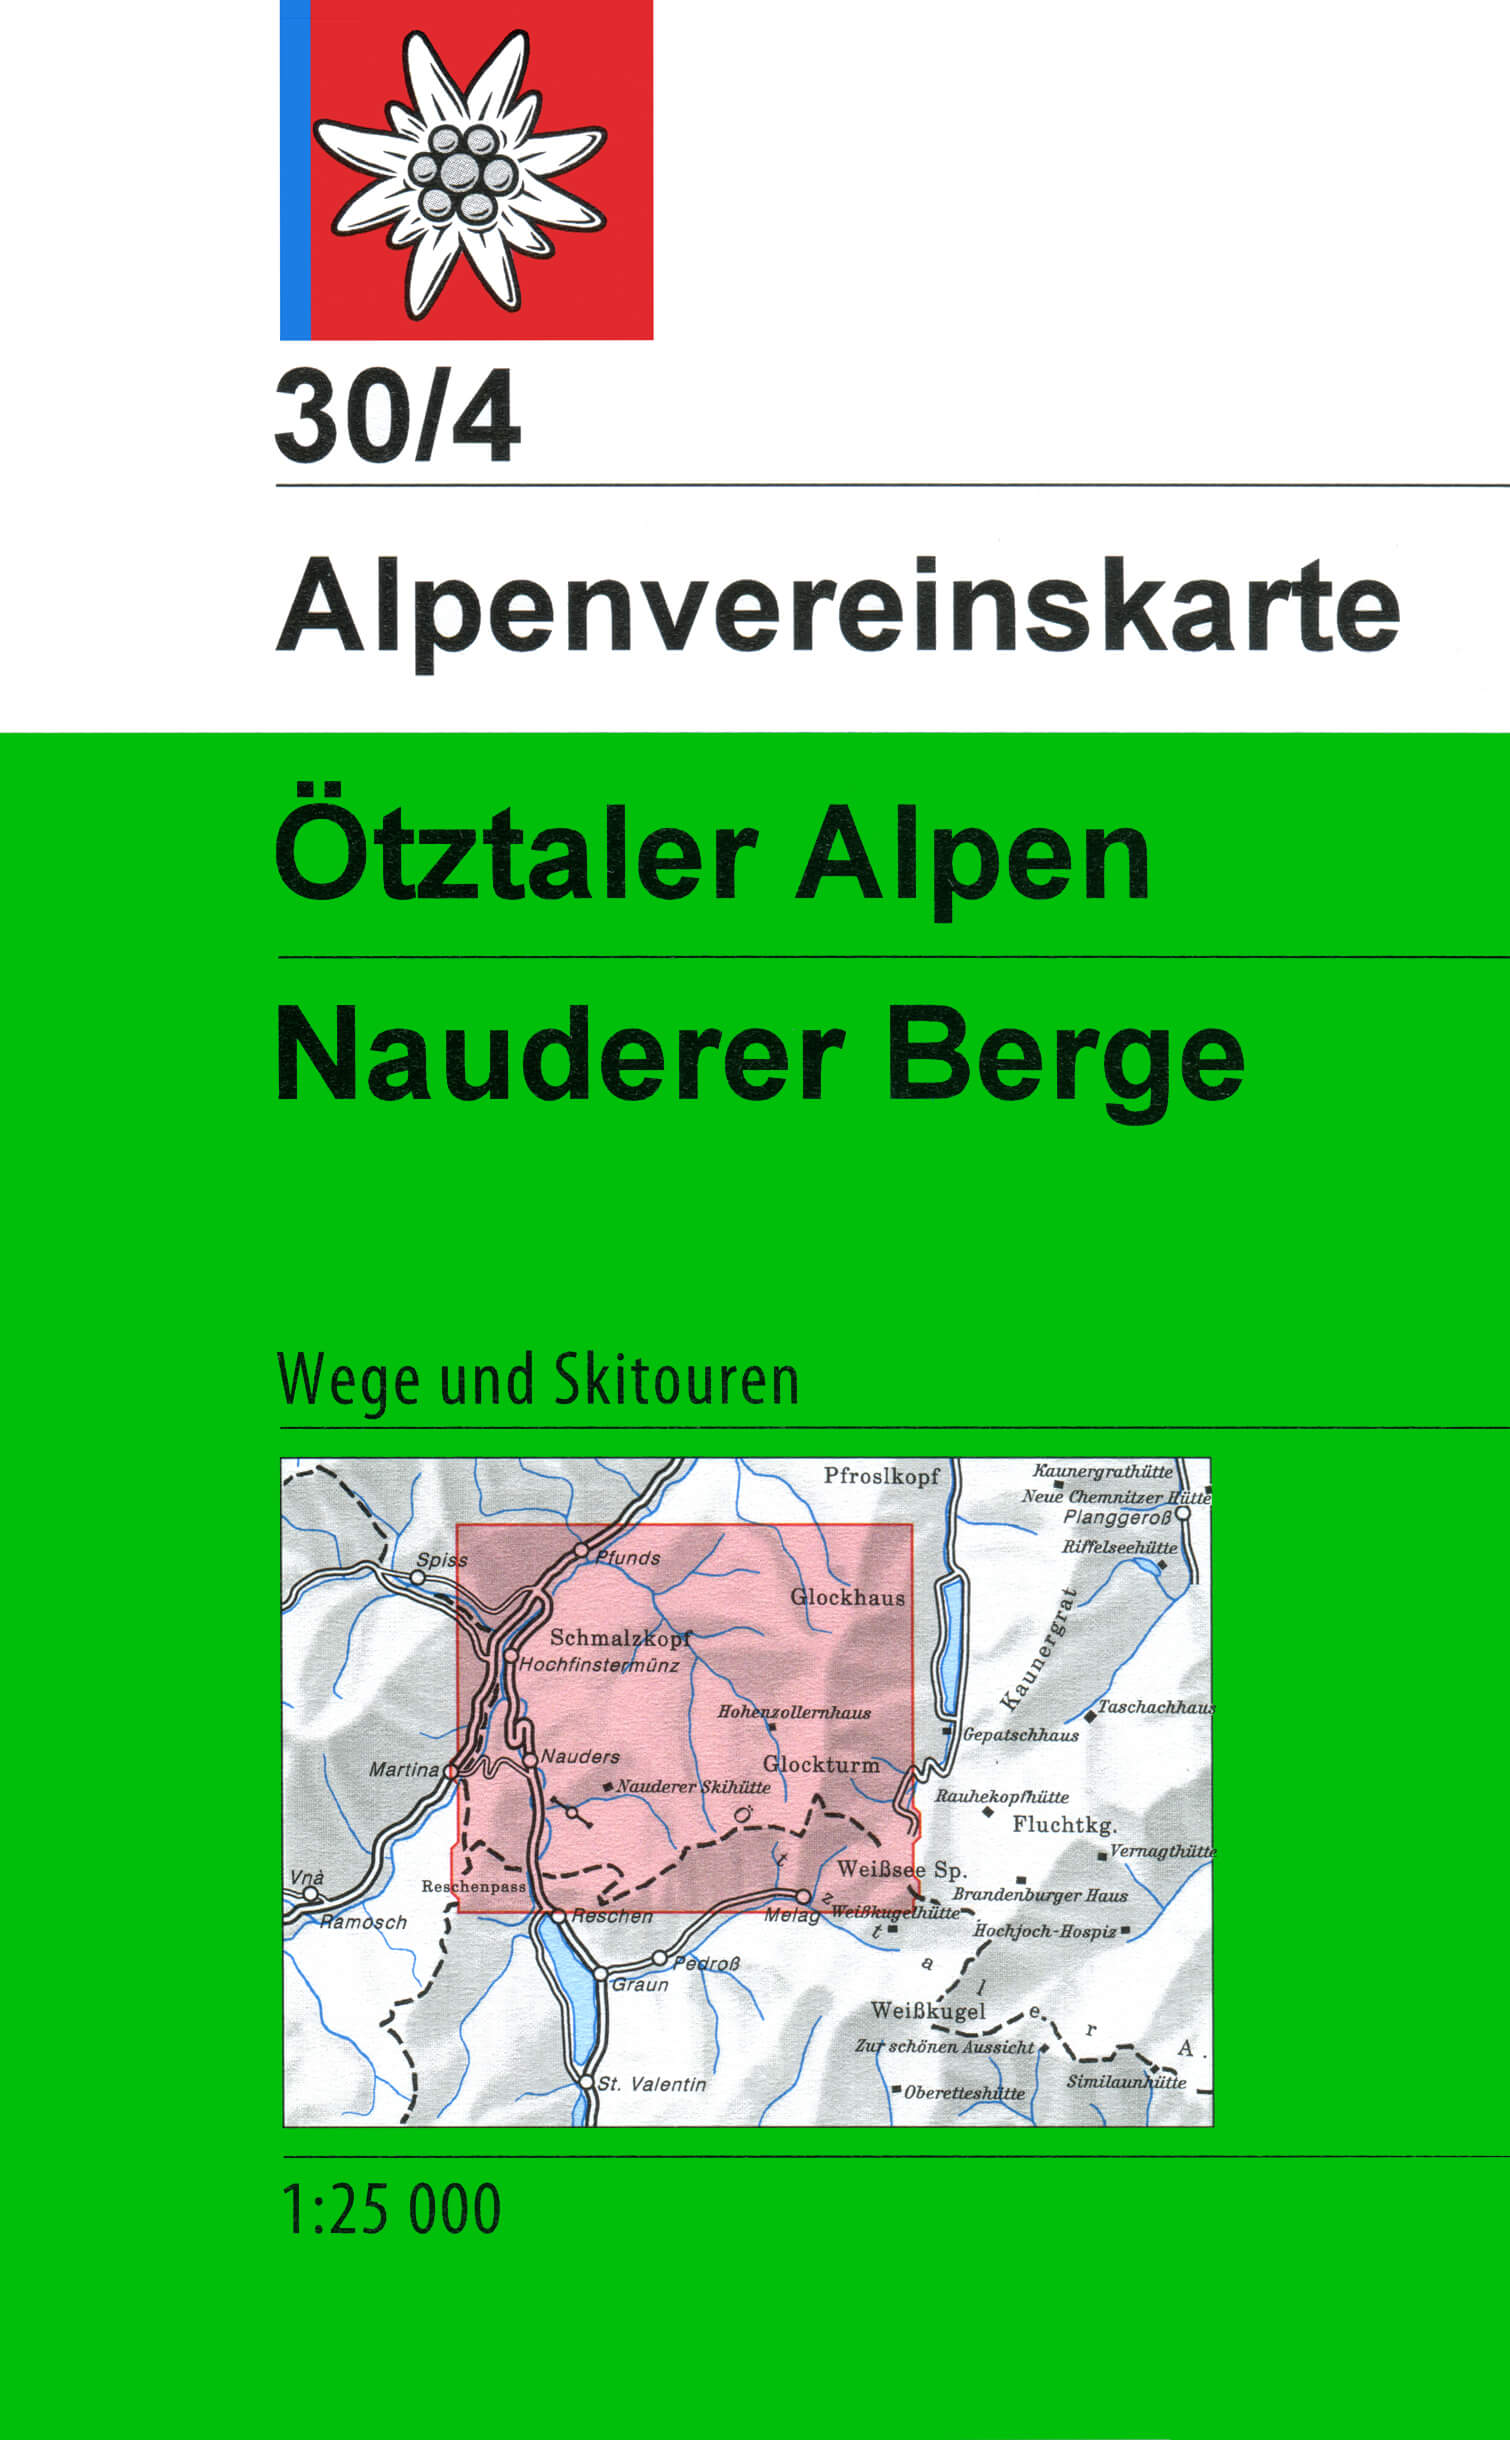 Online bestellen: Wandelkaart 30/4 Alpenvereinskarte Ötztaler Alpen - Nauderer Berge | Alpenverein